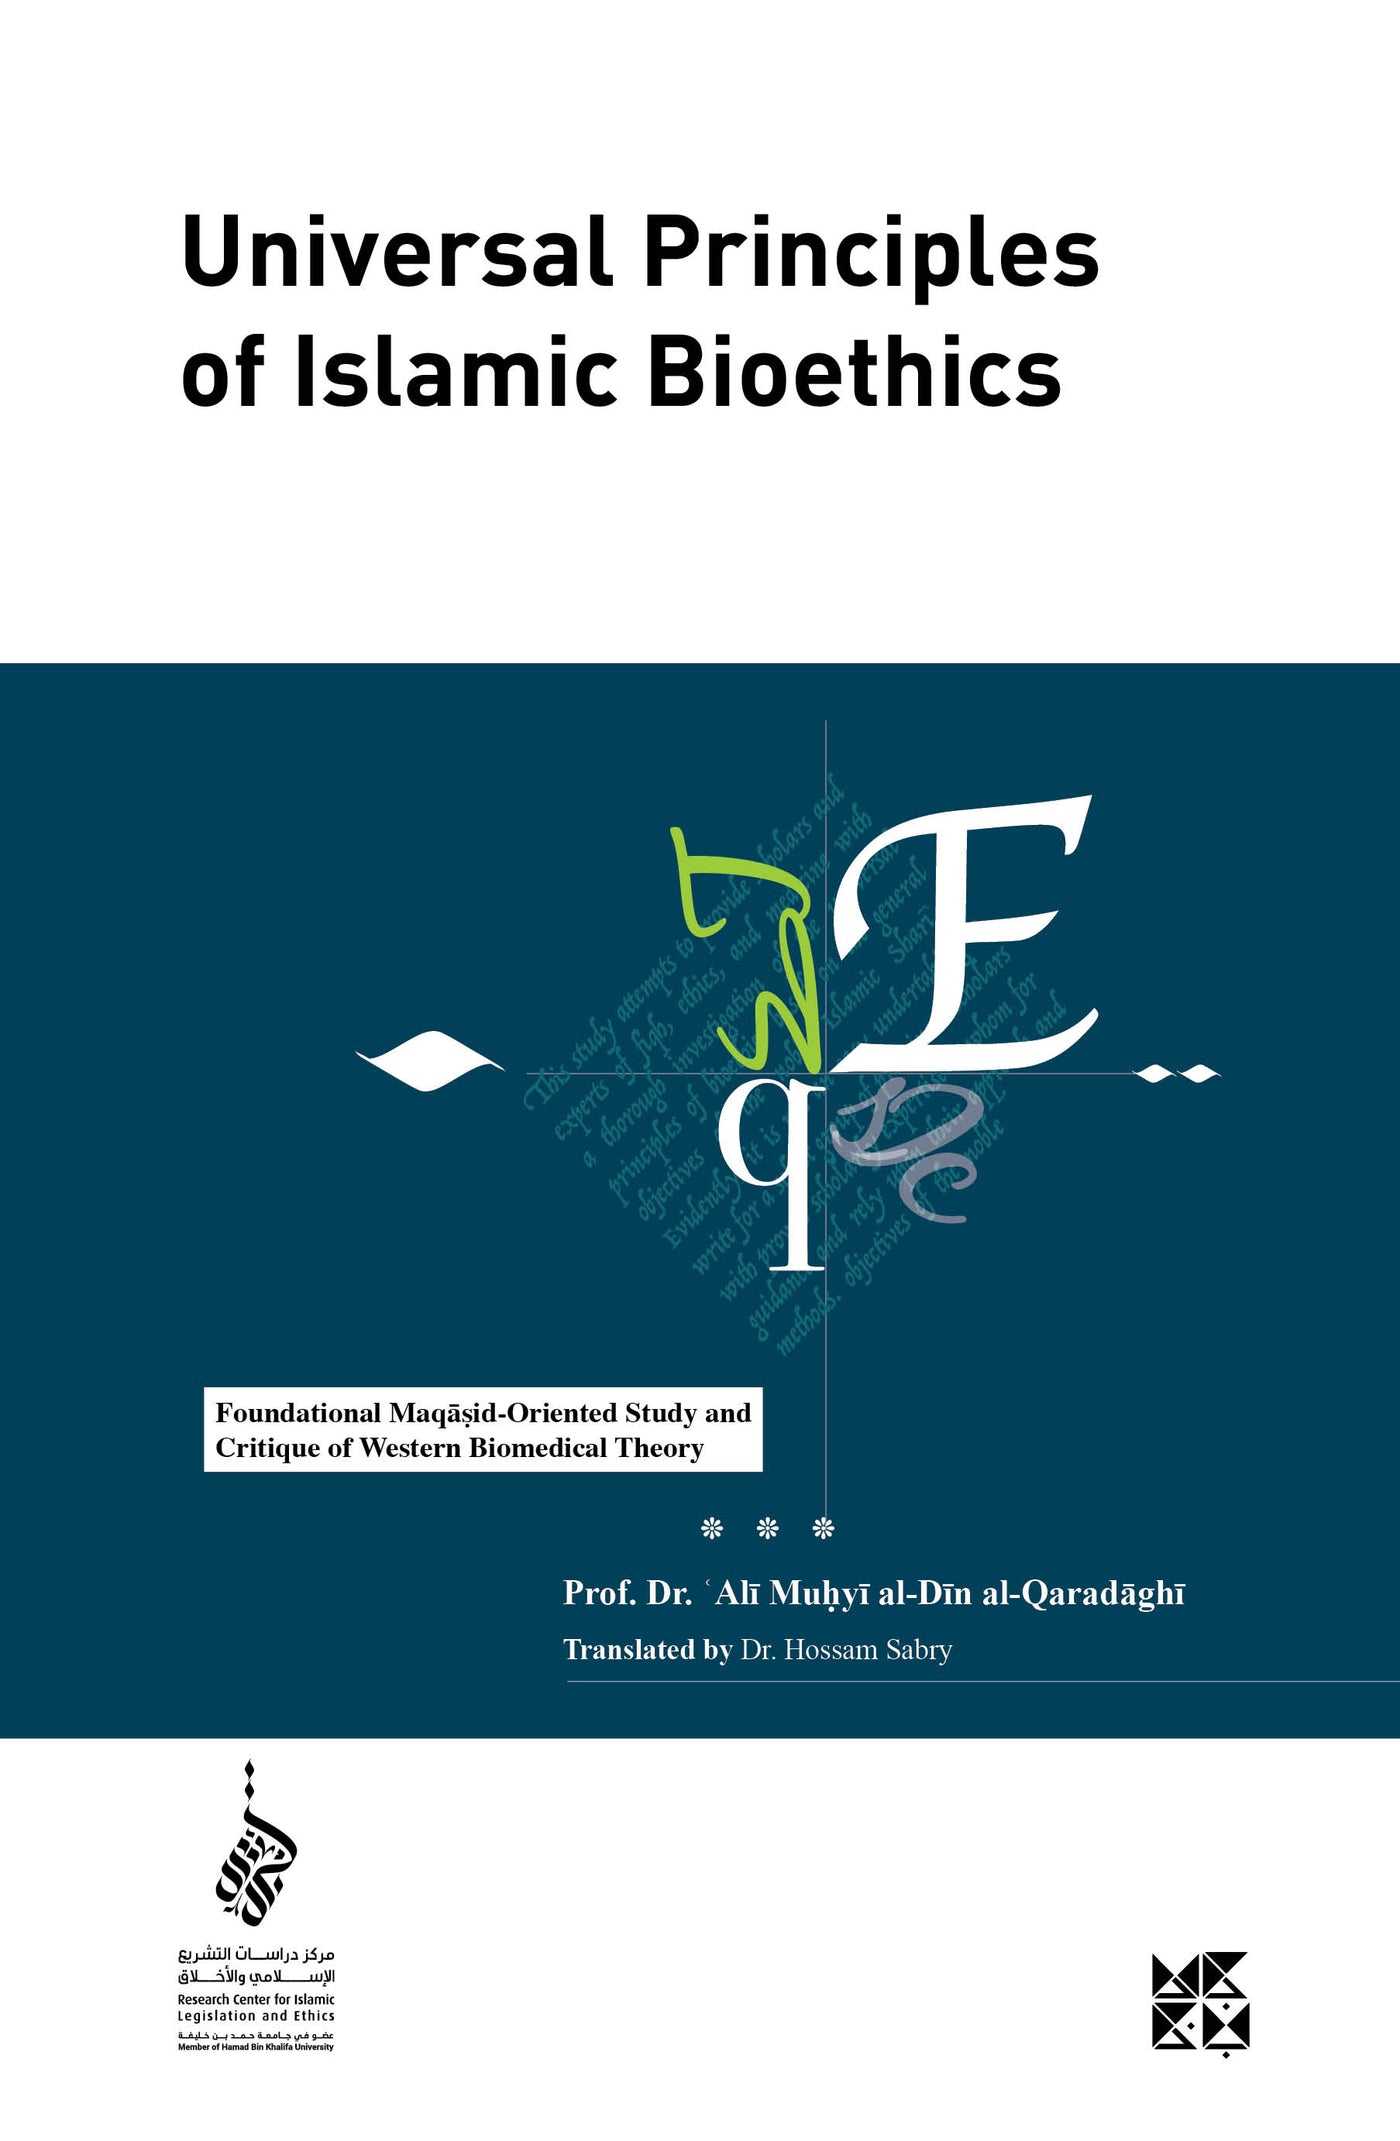 Universal Principles of Islamic Bioethics - Medicine, Mercy, and Healing